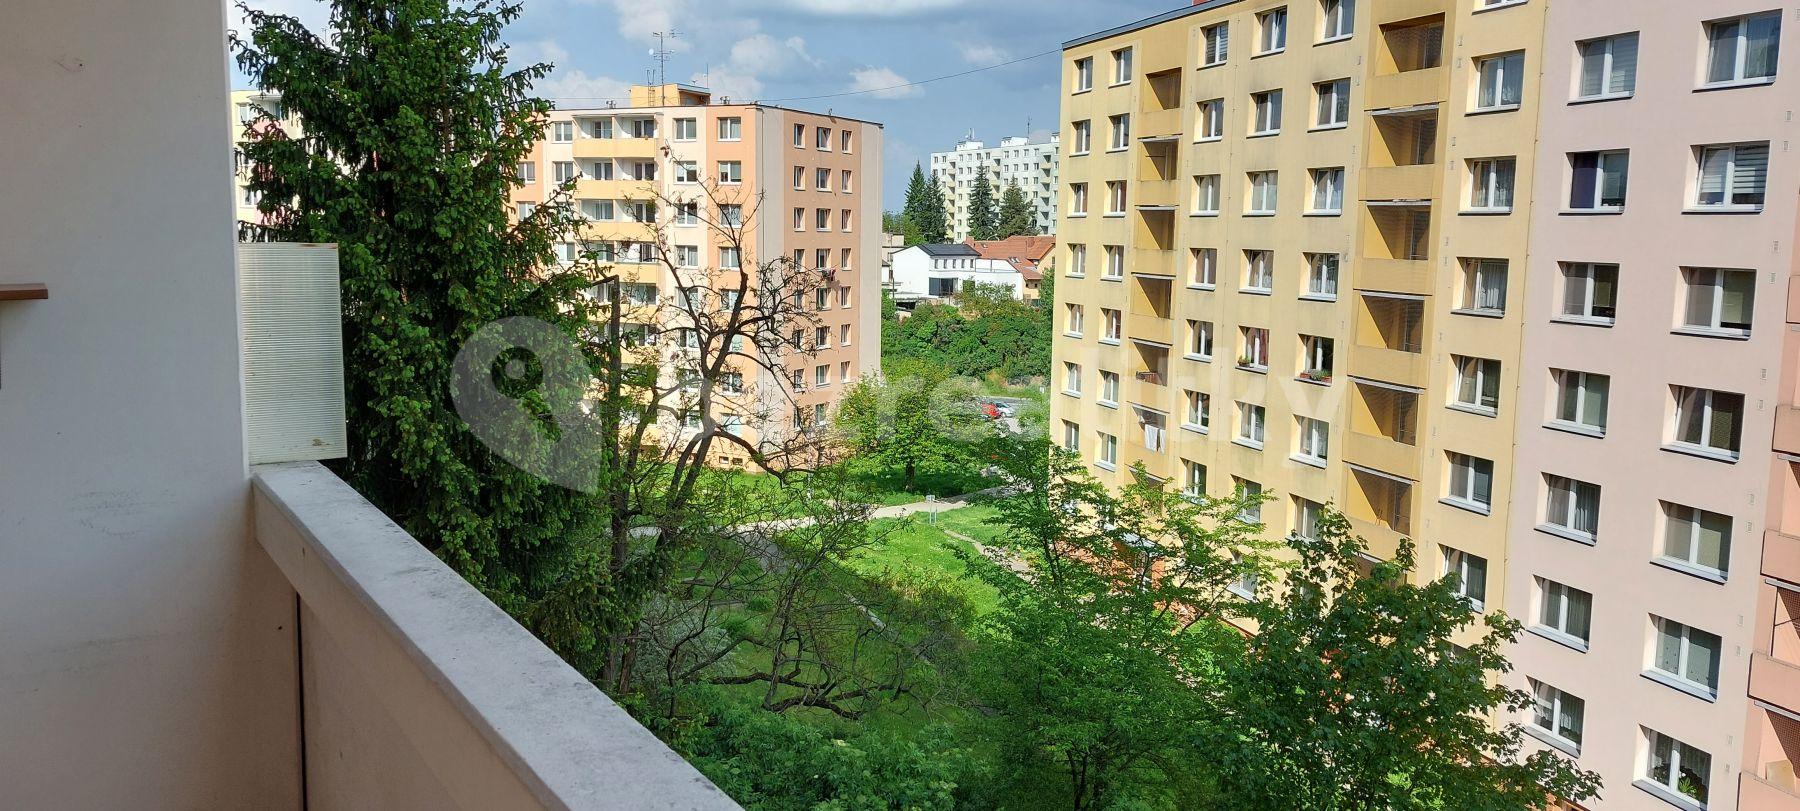 1 bedroom flat to rent, 32 m², Ulička, Brno, Jihomoravský Region